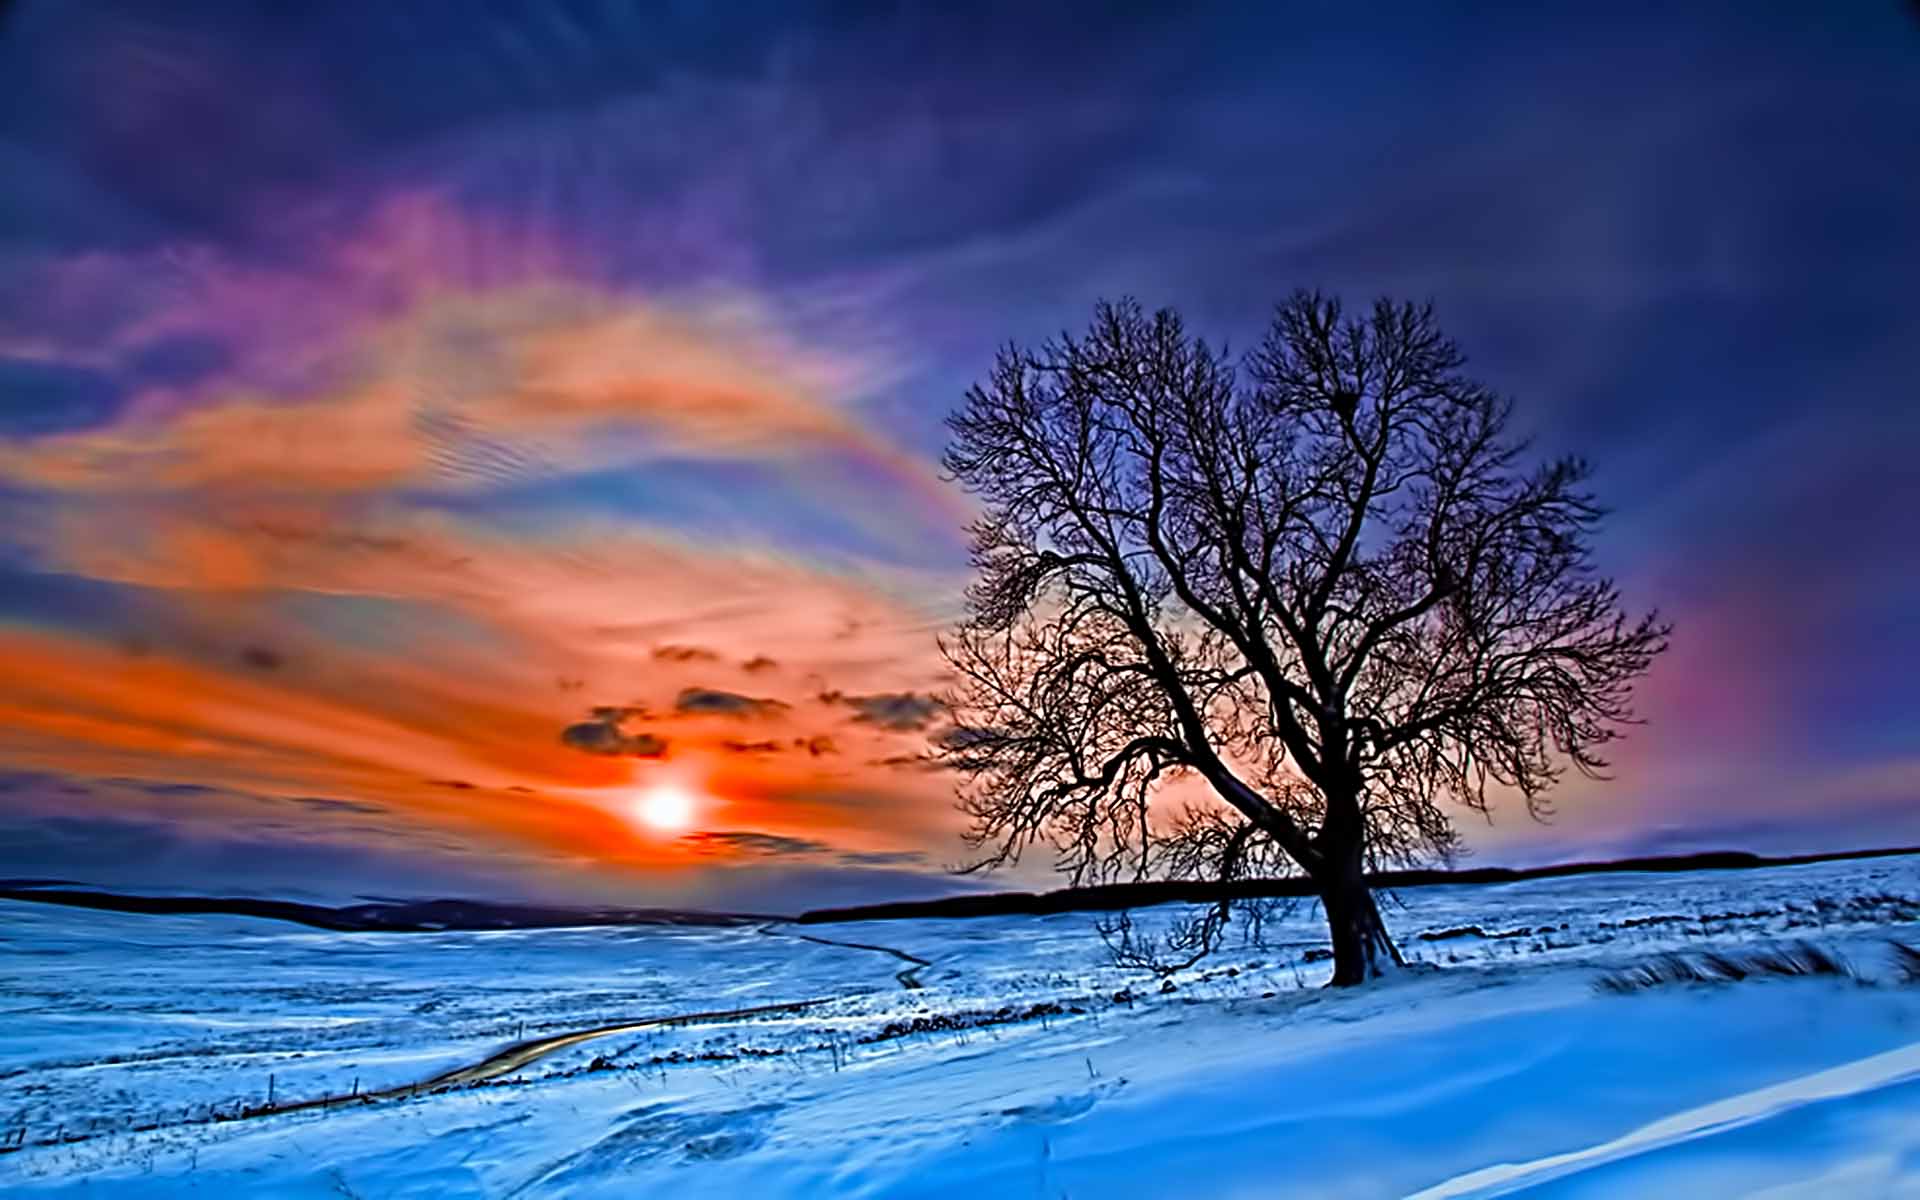 Beautiful sunset photo in winter